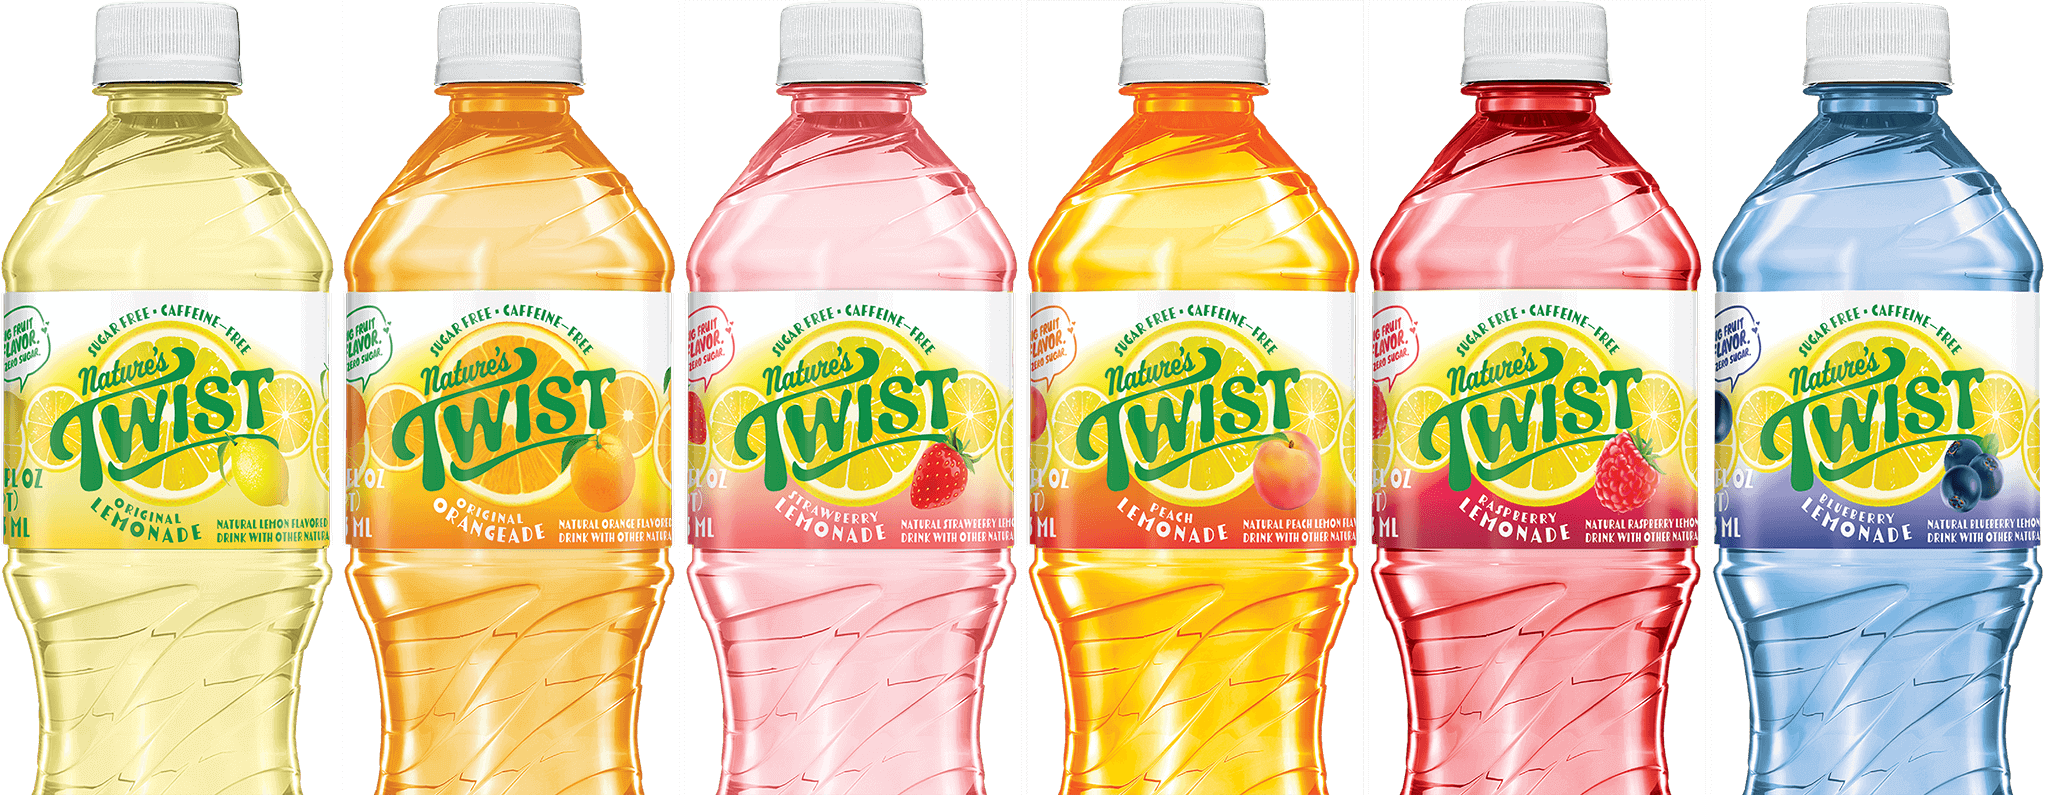 Nature's Twist Lemonade Bottles